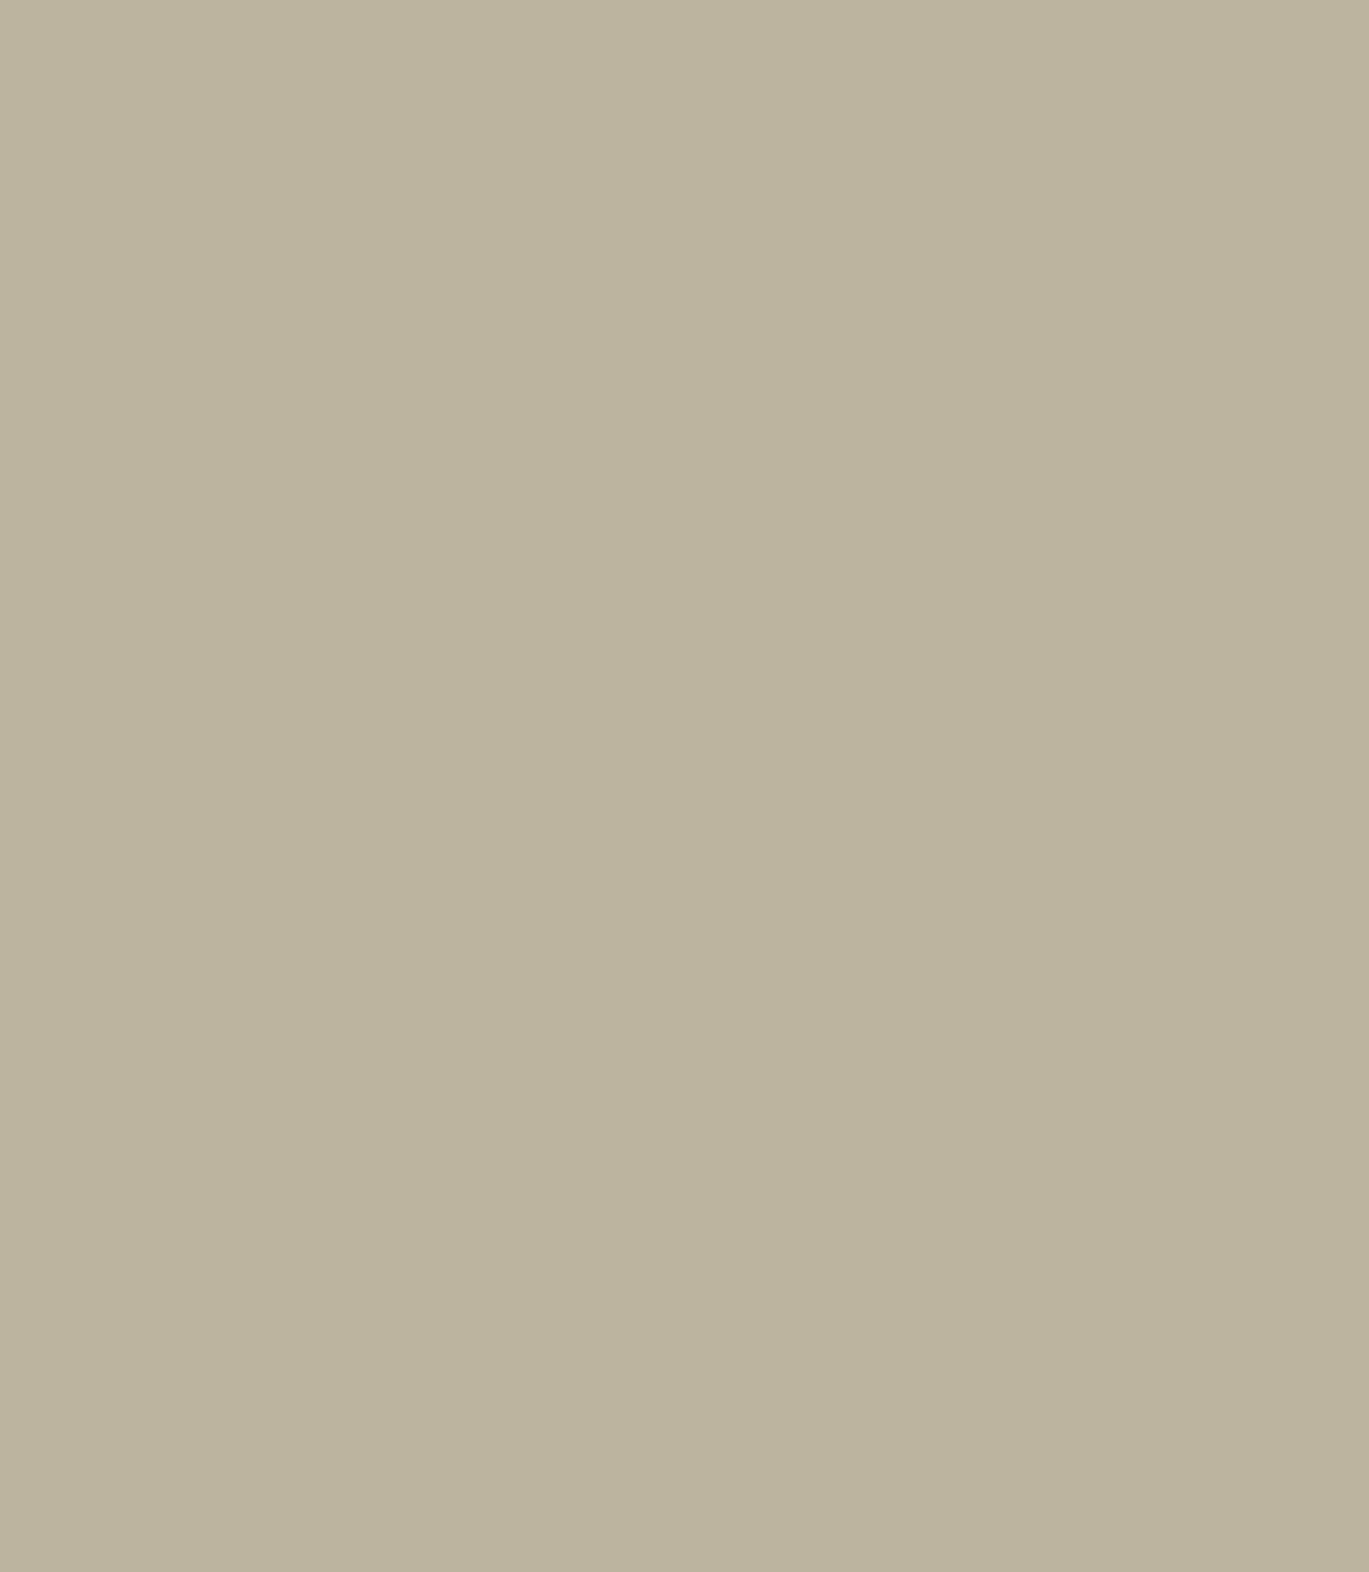 Николай Пржевальский. 1888. Фотография: В. Класен /<a href="https://commons.wikimedia.org/w/index.php?curid=22946244" target="_blank" rel="noopener">Wikimedia Commons</a> / Public Domain